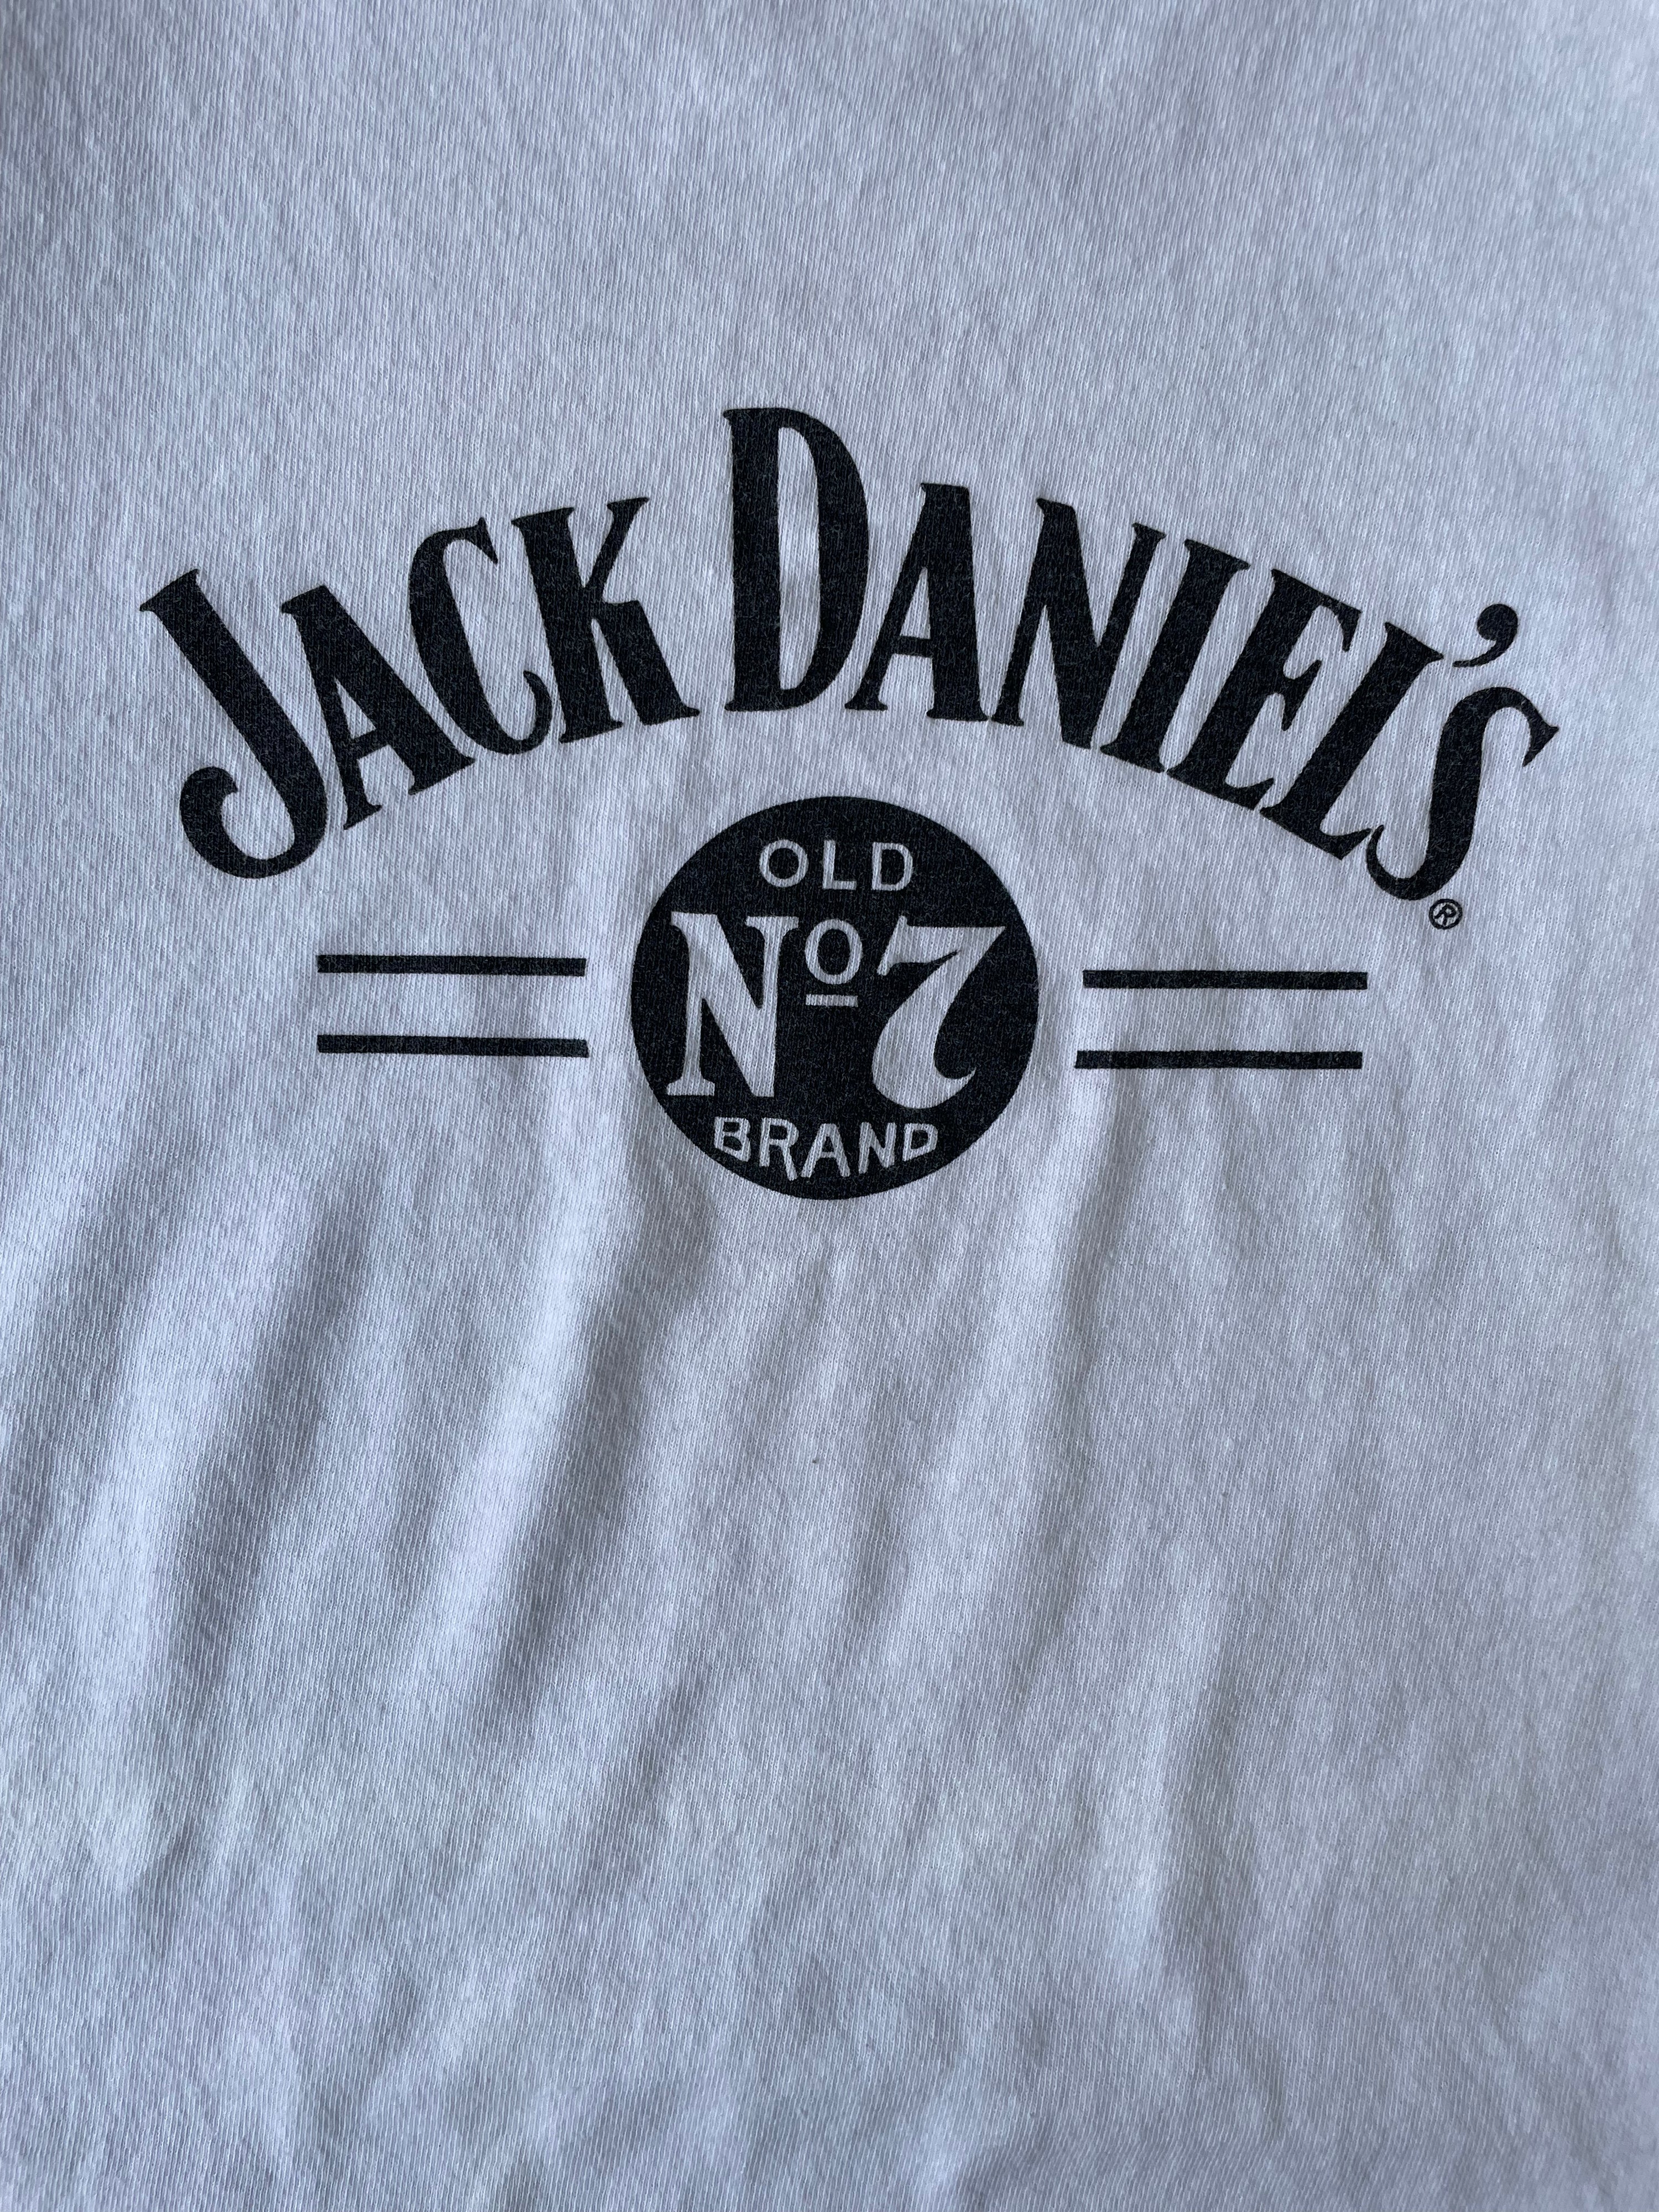 Vintage Jack Daniels T-Shirt - XL